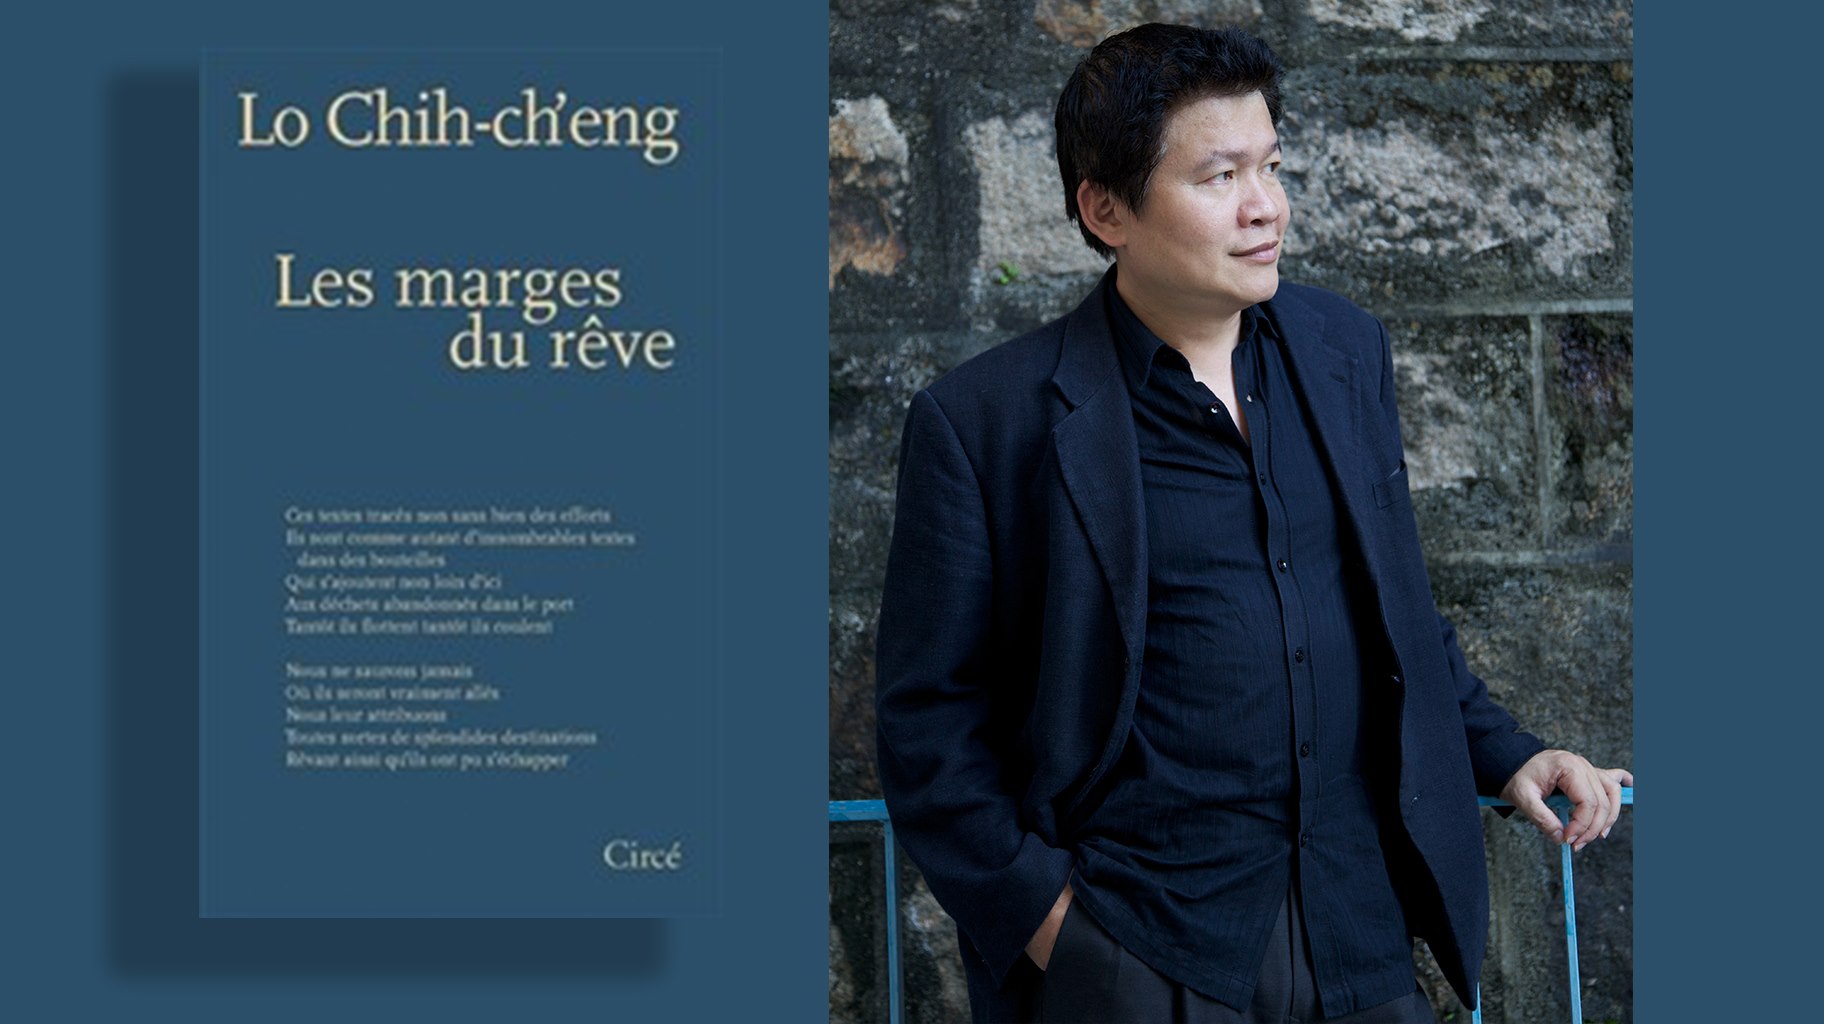 Digital programs in French spotlighting poet Lo Chih-ch’eng